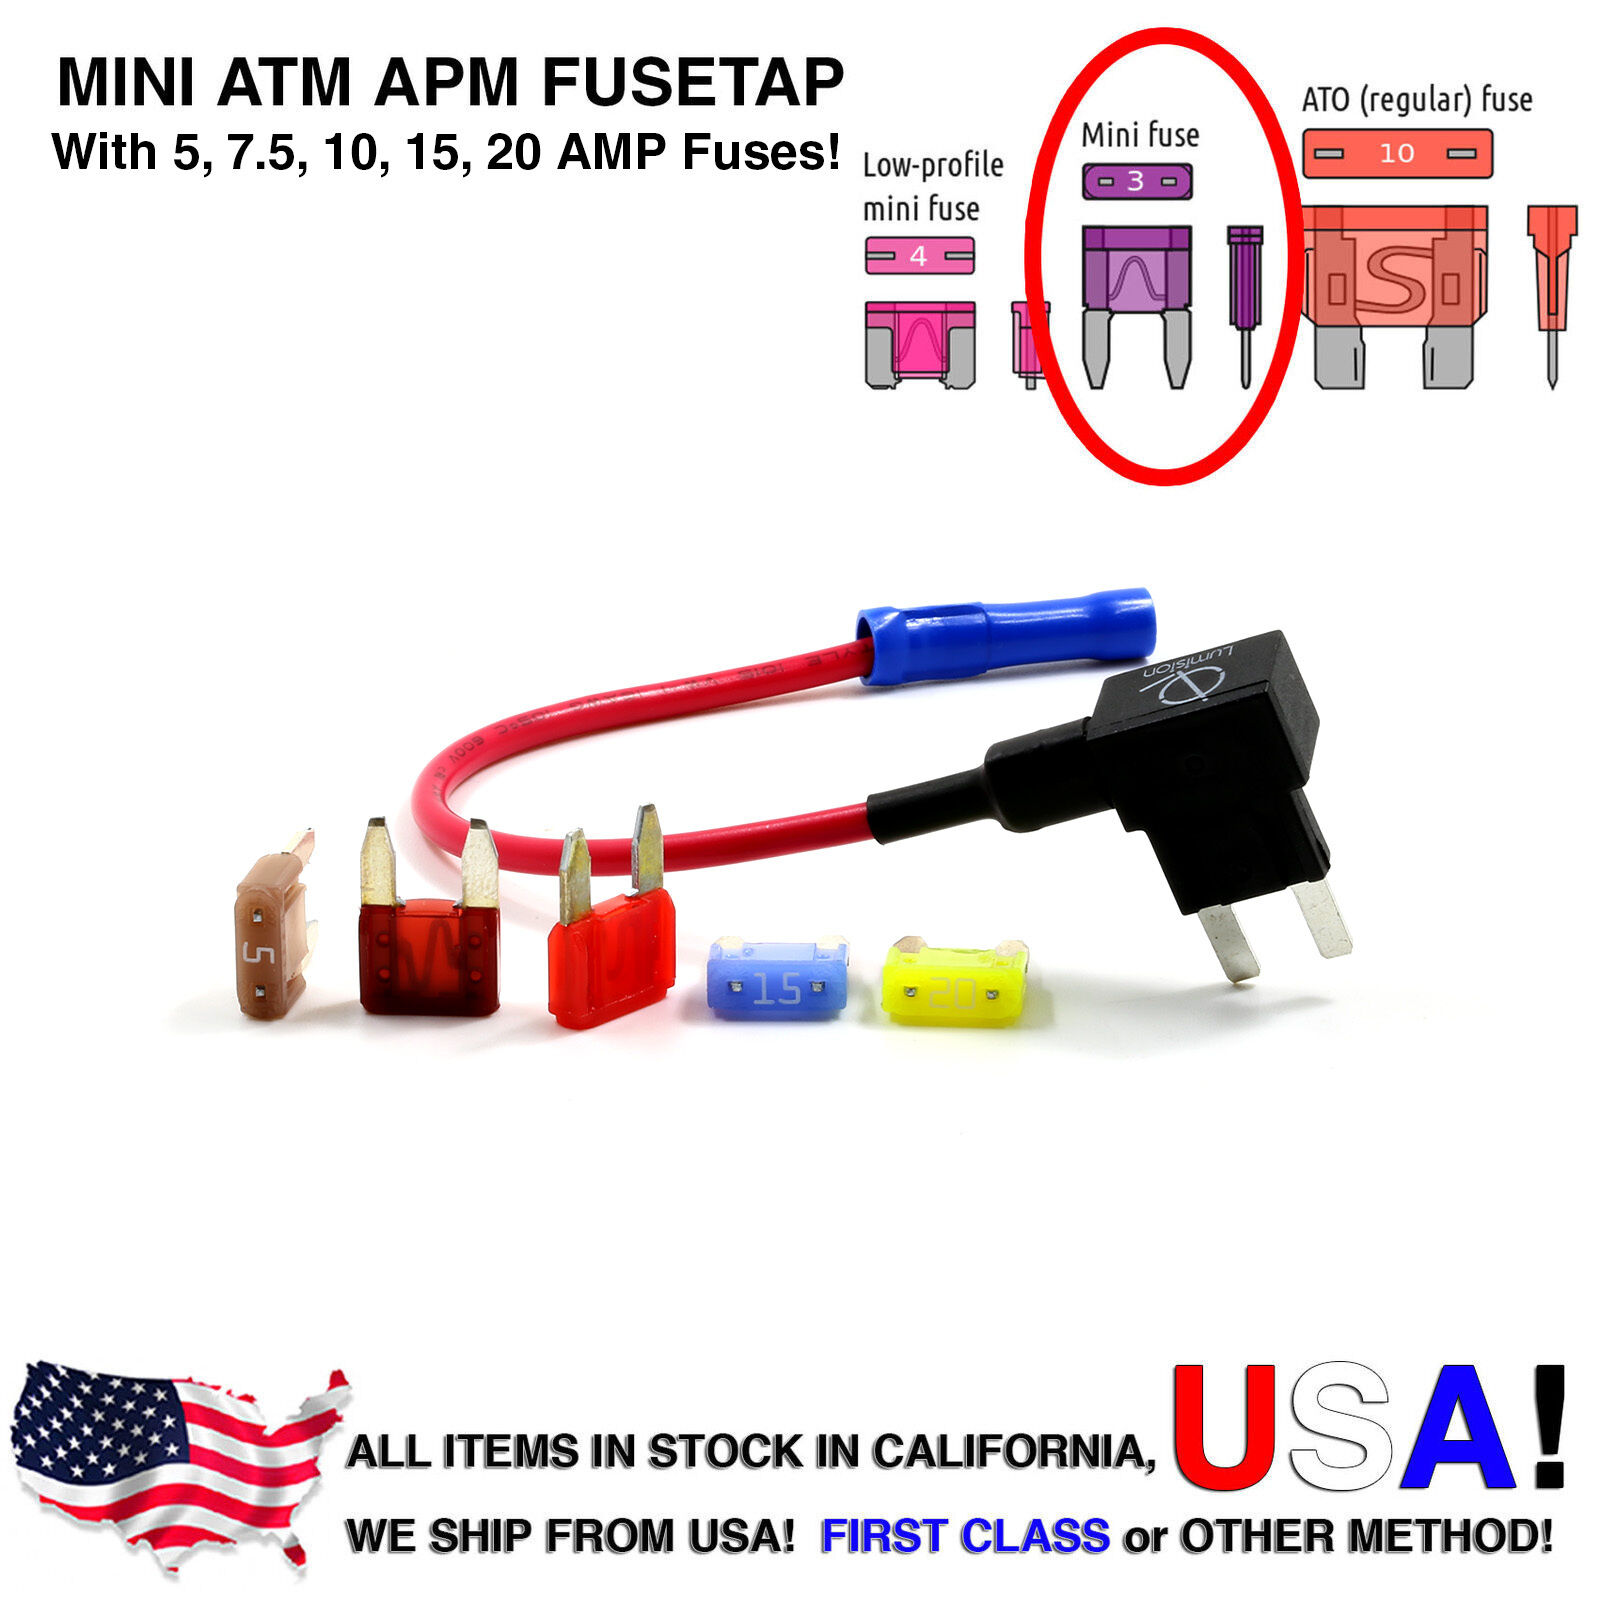 Lumision 16AWG Car Add-A-Circuit ATM APM Mini Fuse Tap Fusetap + Fuse Set